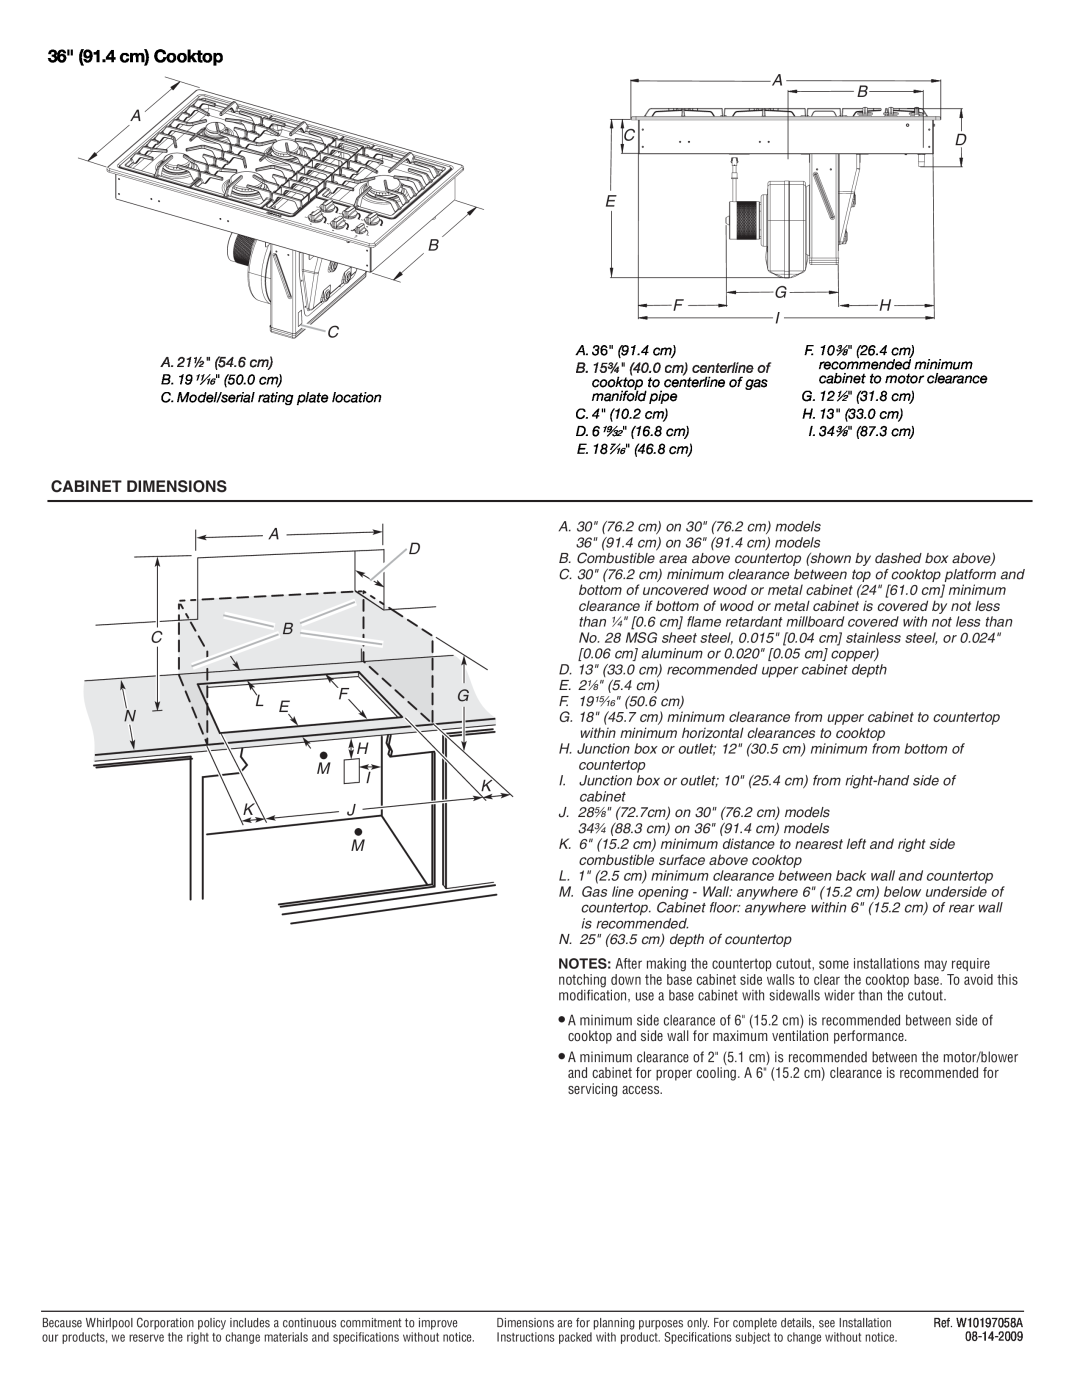 Jenn-Air JGD3536W dimensions 36 91.4 cm Cooktop, Cabinet Dimensions, A B A, E B G F H I C 